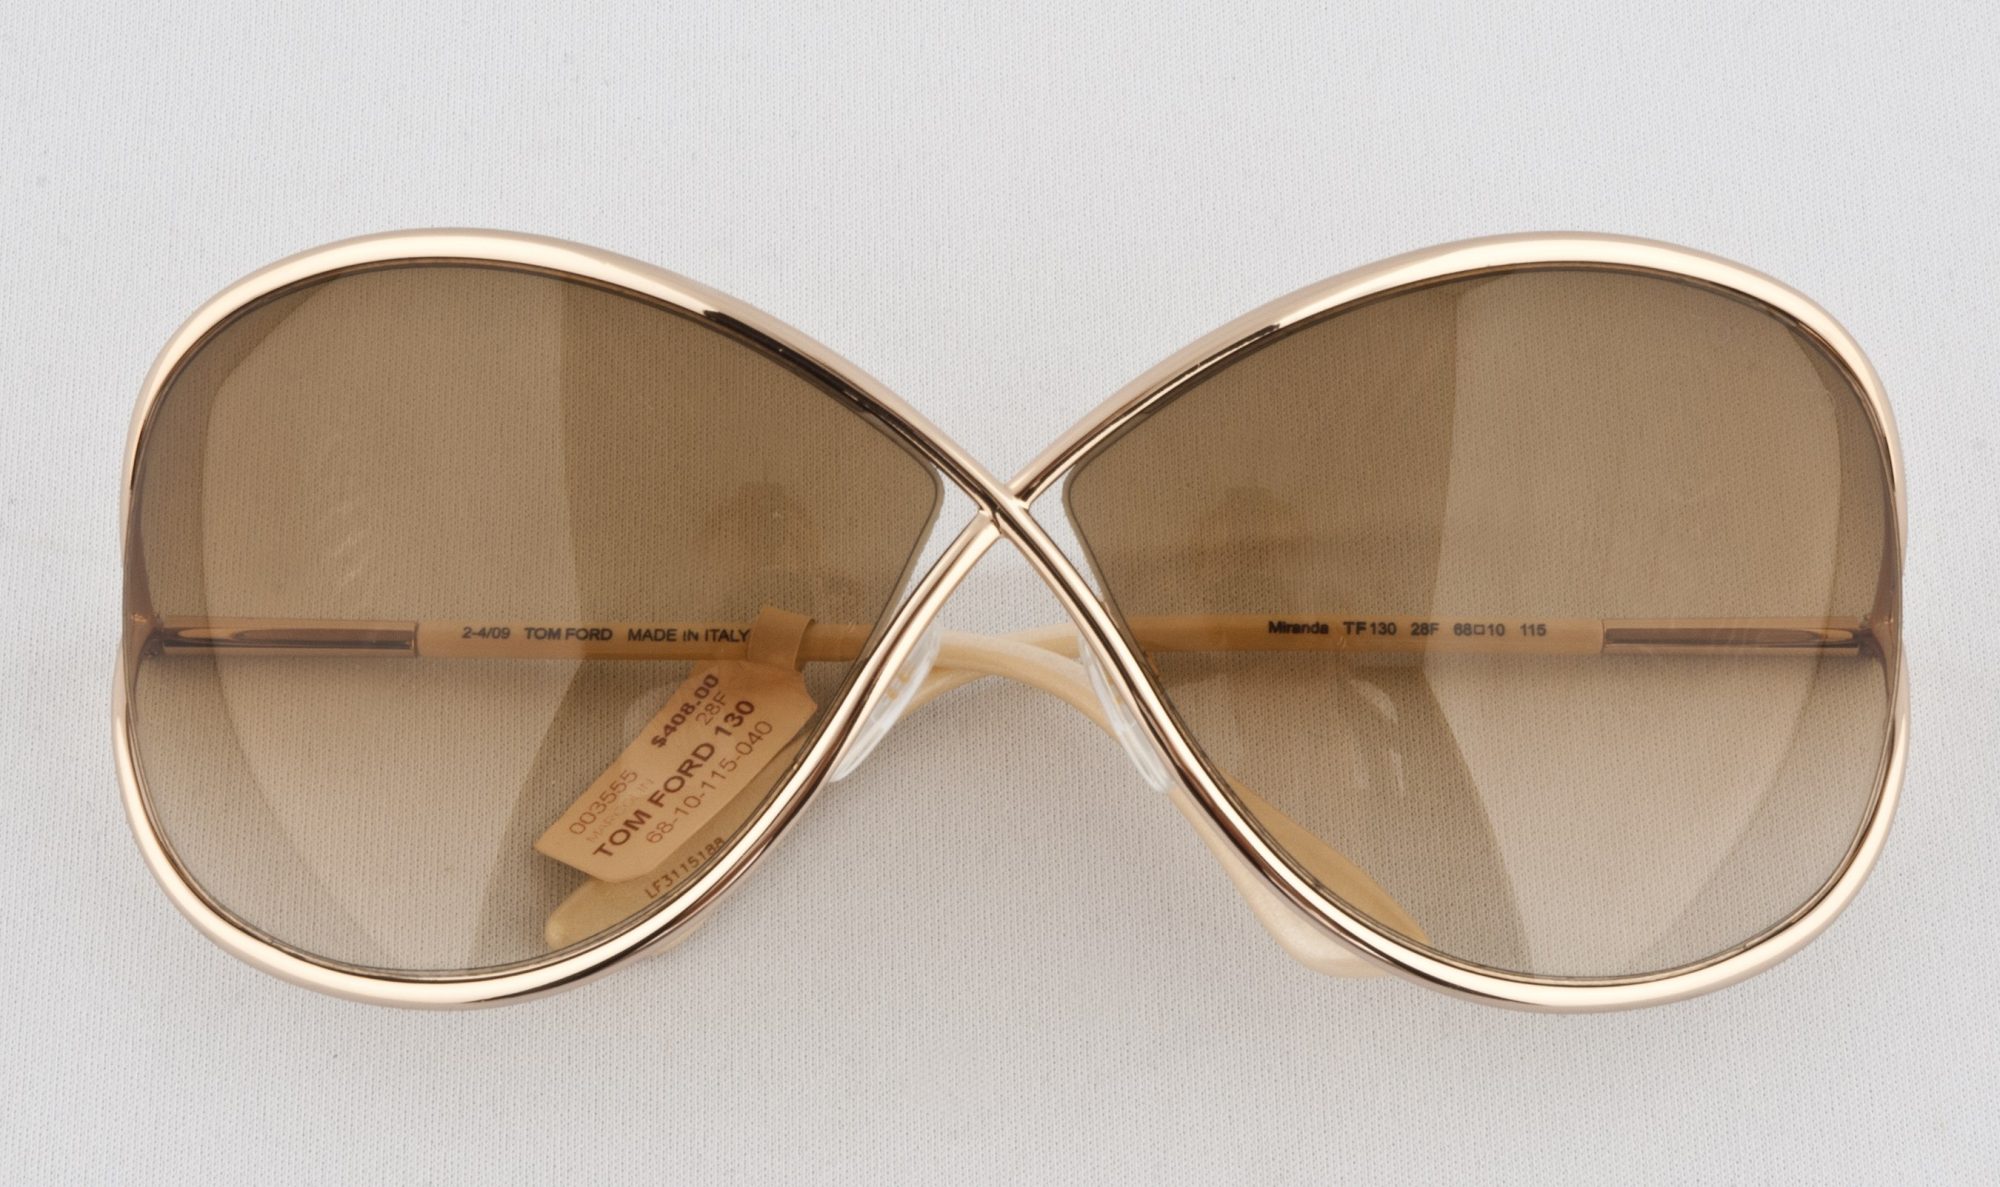 Women's Model 130 Tom Ford sunglasses, $408, from Eye to Eye Optometry (9678 142 St., 780-423-2113).